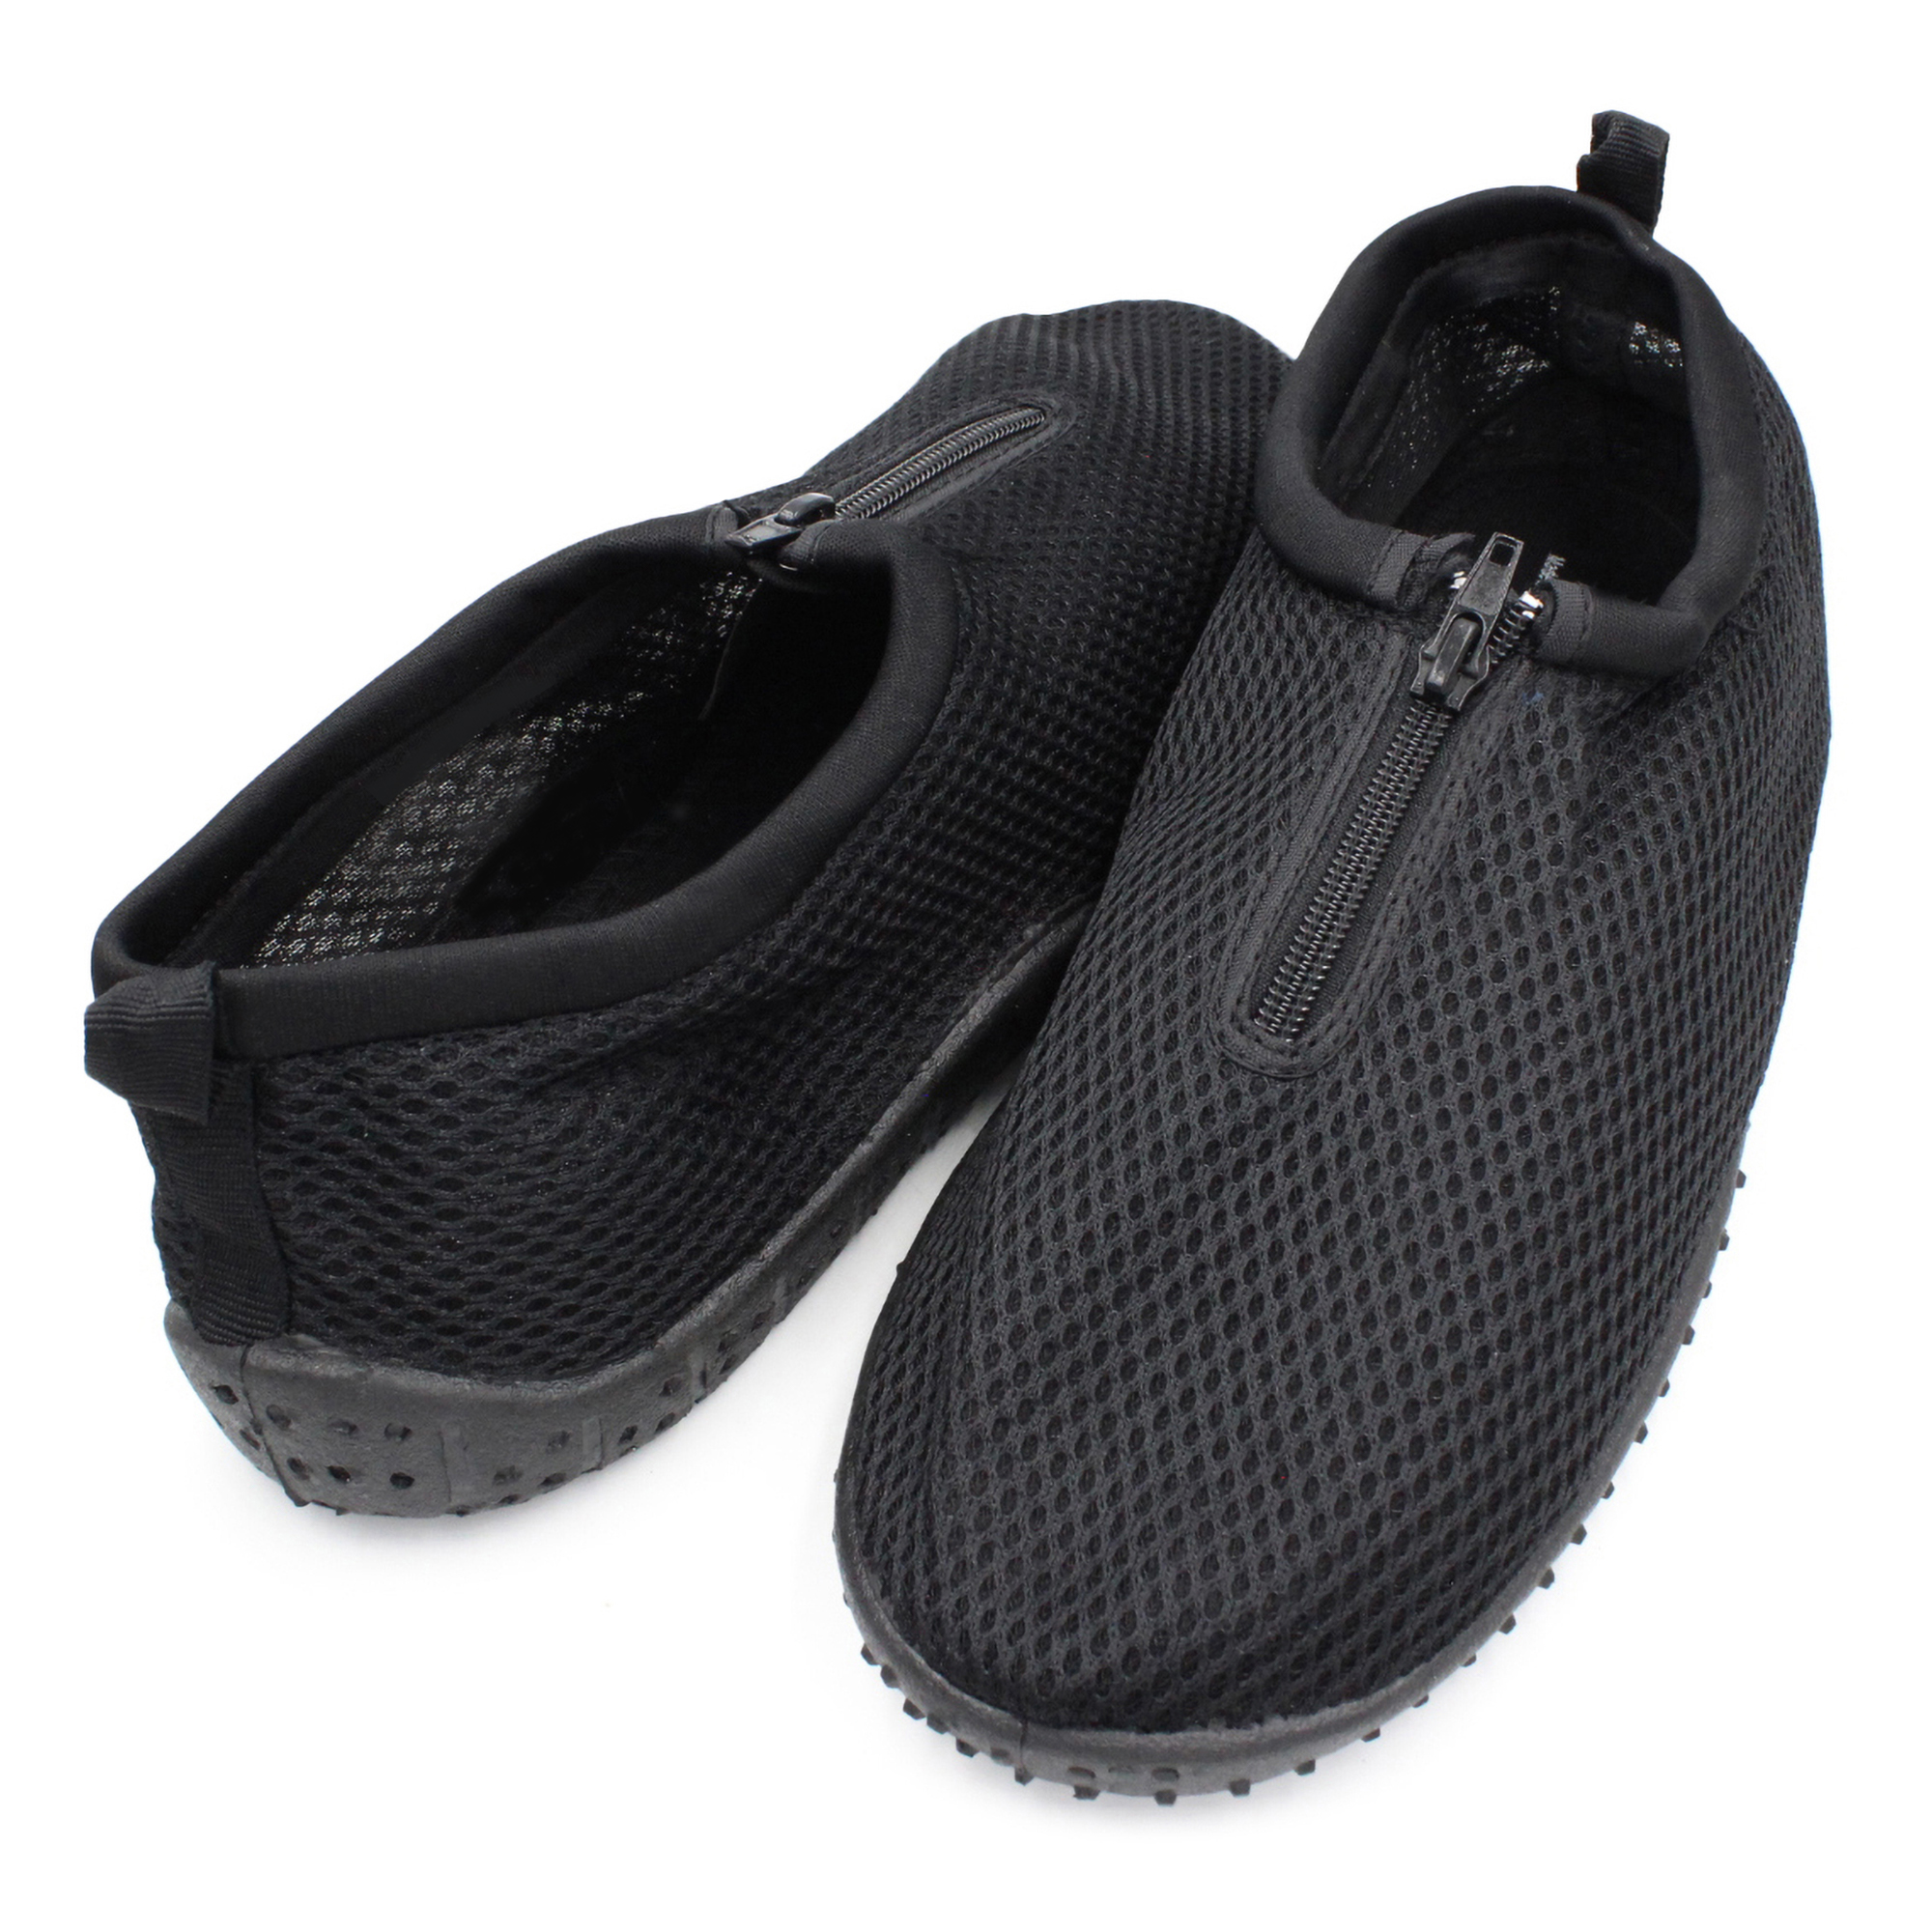 Kid's/Women's/Men's Water Shoes Barefoot Quick Dry Aqua Aqua Socks for Beach Outdoor Swim Yoga Sports 